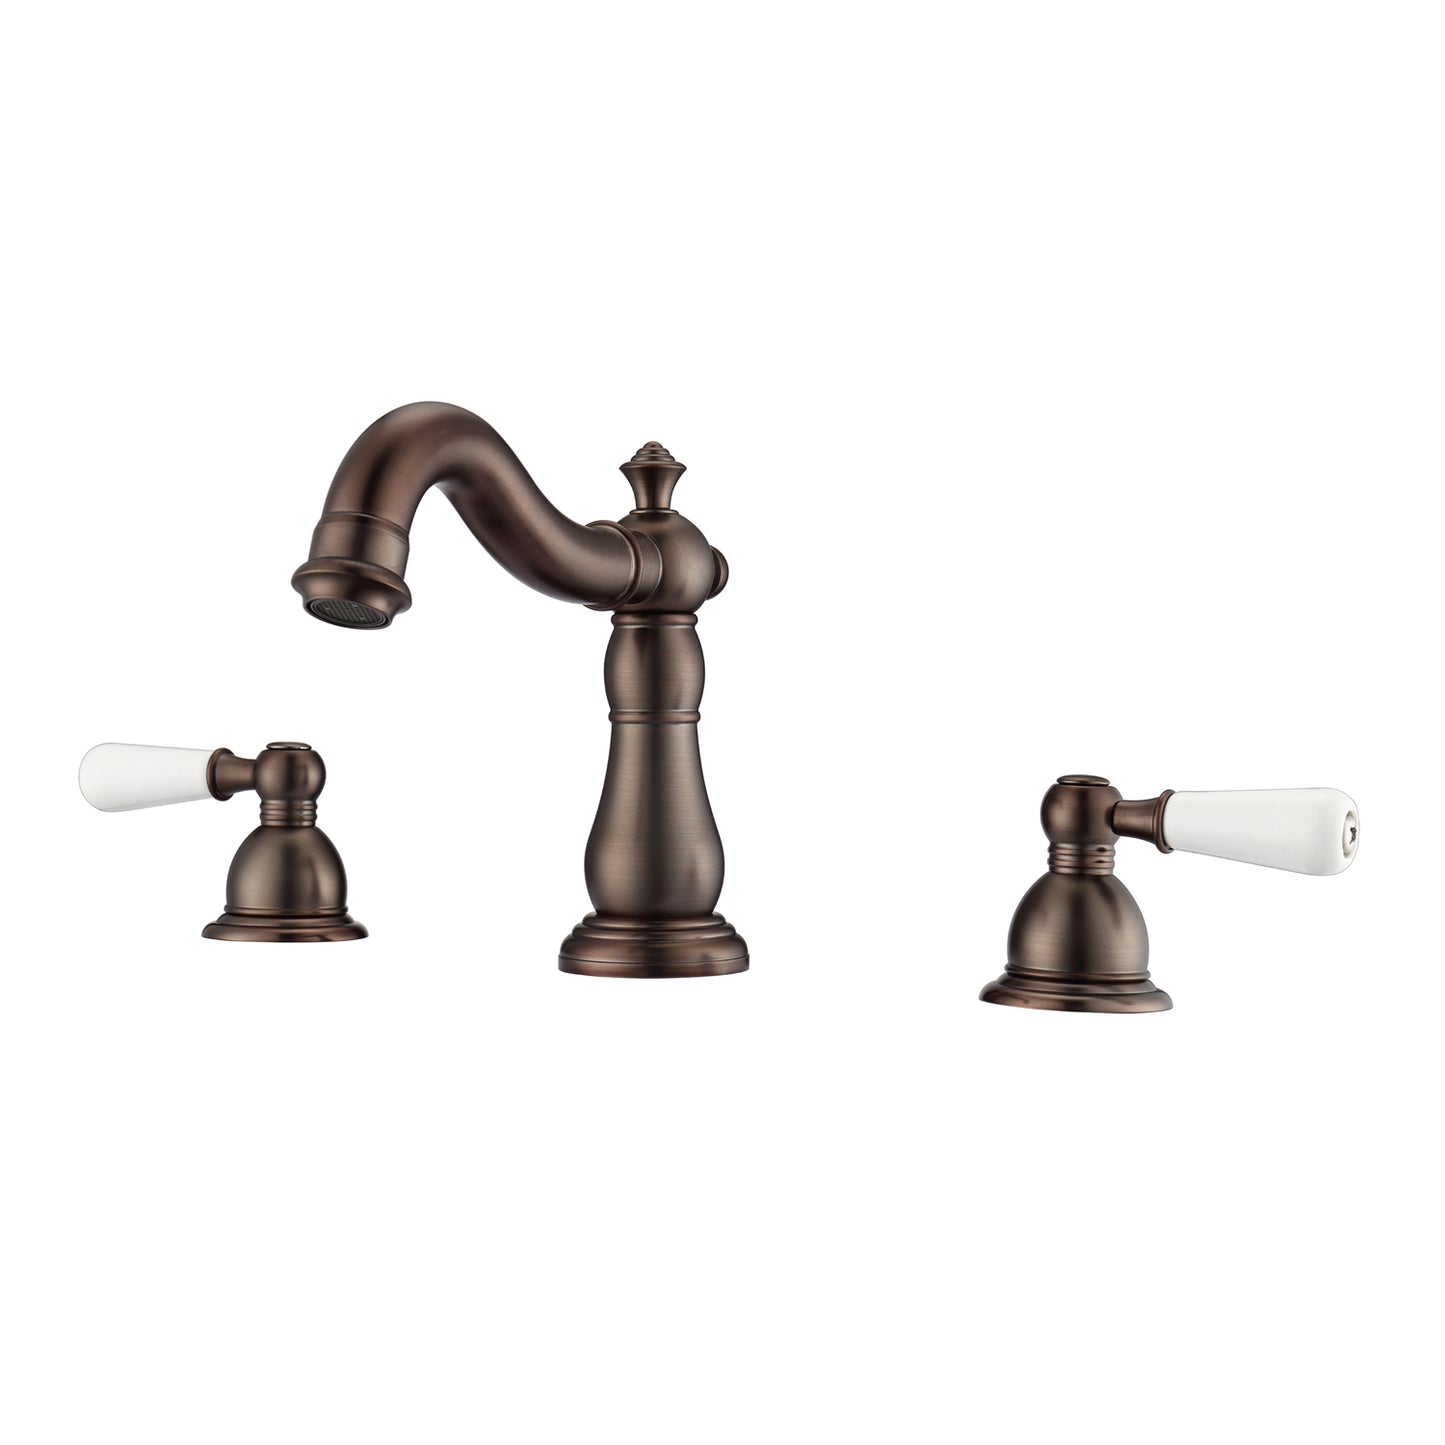 Aldora 8" Widespread Oil Rubbed Bronze Bathroom Faucet with Porcelain Lever Handles